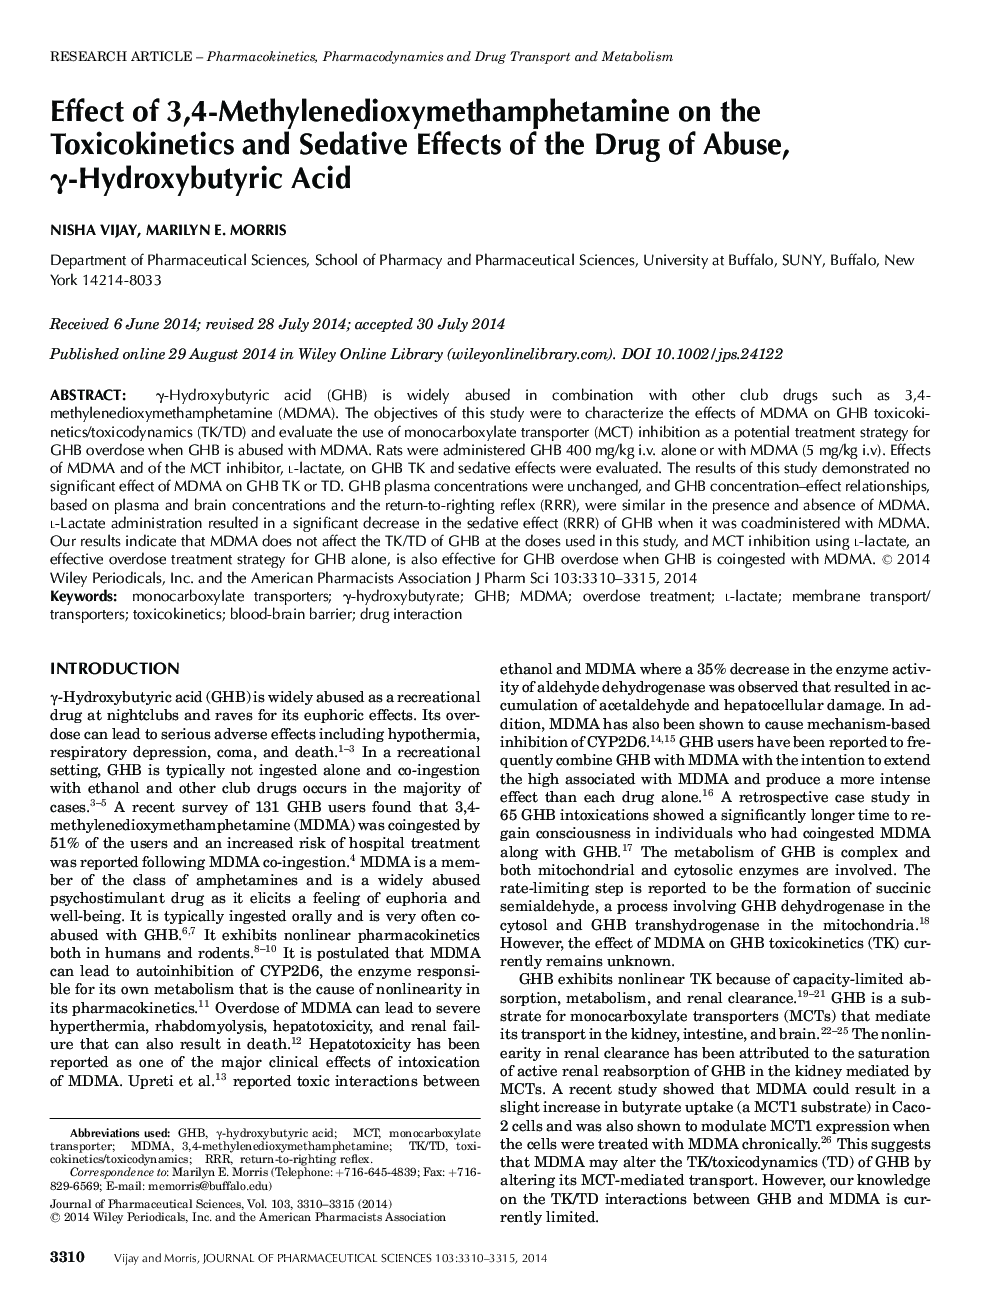 Effect of 3,4-Methylenedioxymethamphetamine on the Toxicokinetics and Sedative Effects of the Drug of Abuse, Î³-Hydroxybutyric Acid